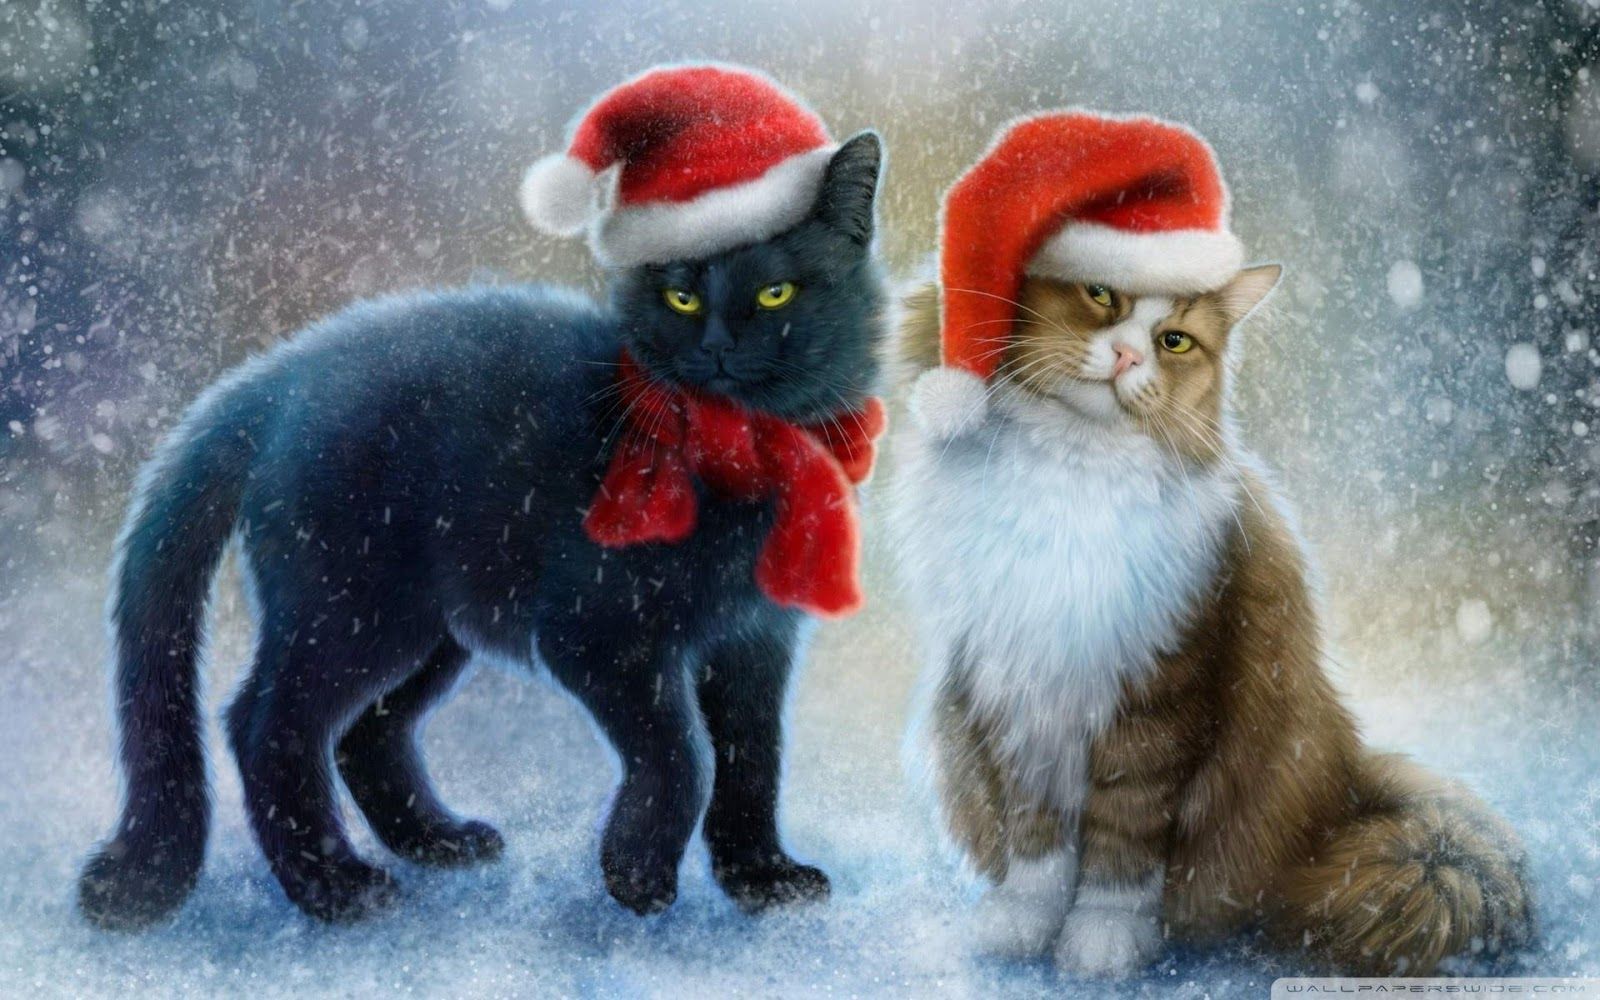 1080p HD Christmas Cat Wallpaper High Quality Desktop, iphone and android and Wallpap. Cat wallpaper, Christmas cats, Christmas photography backdrops